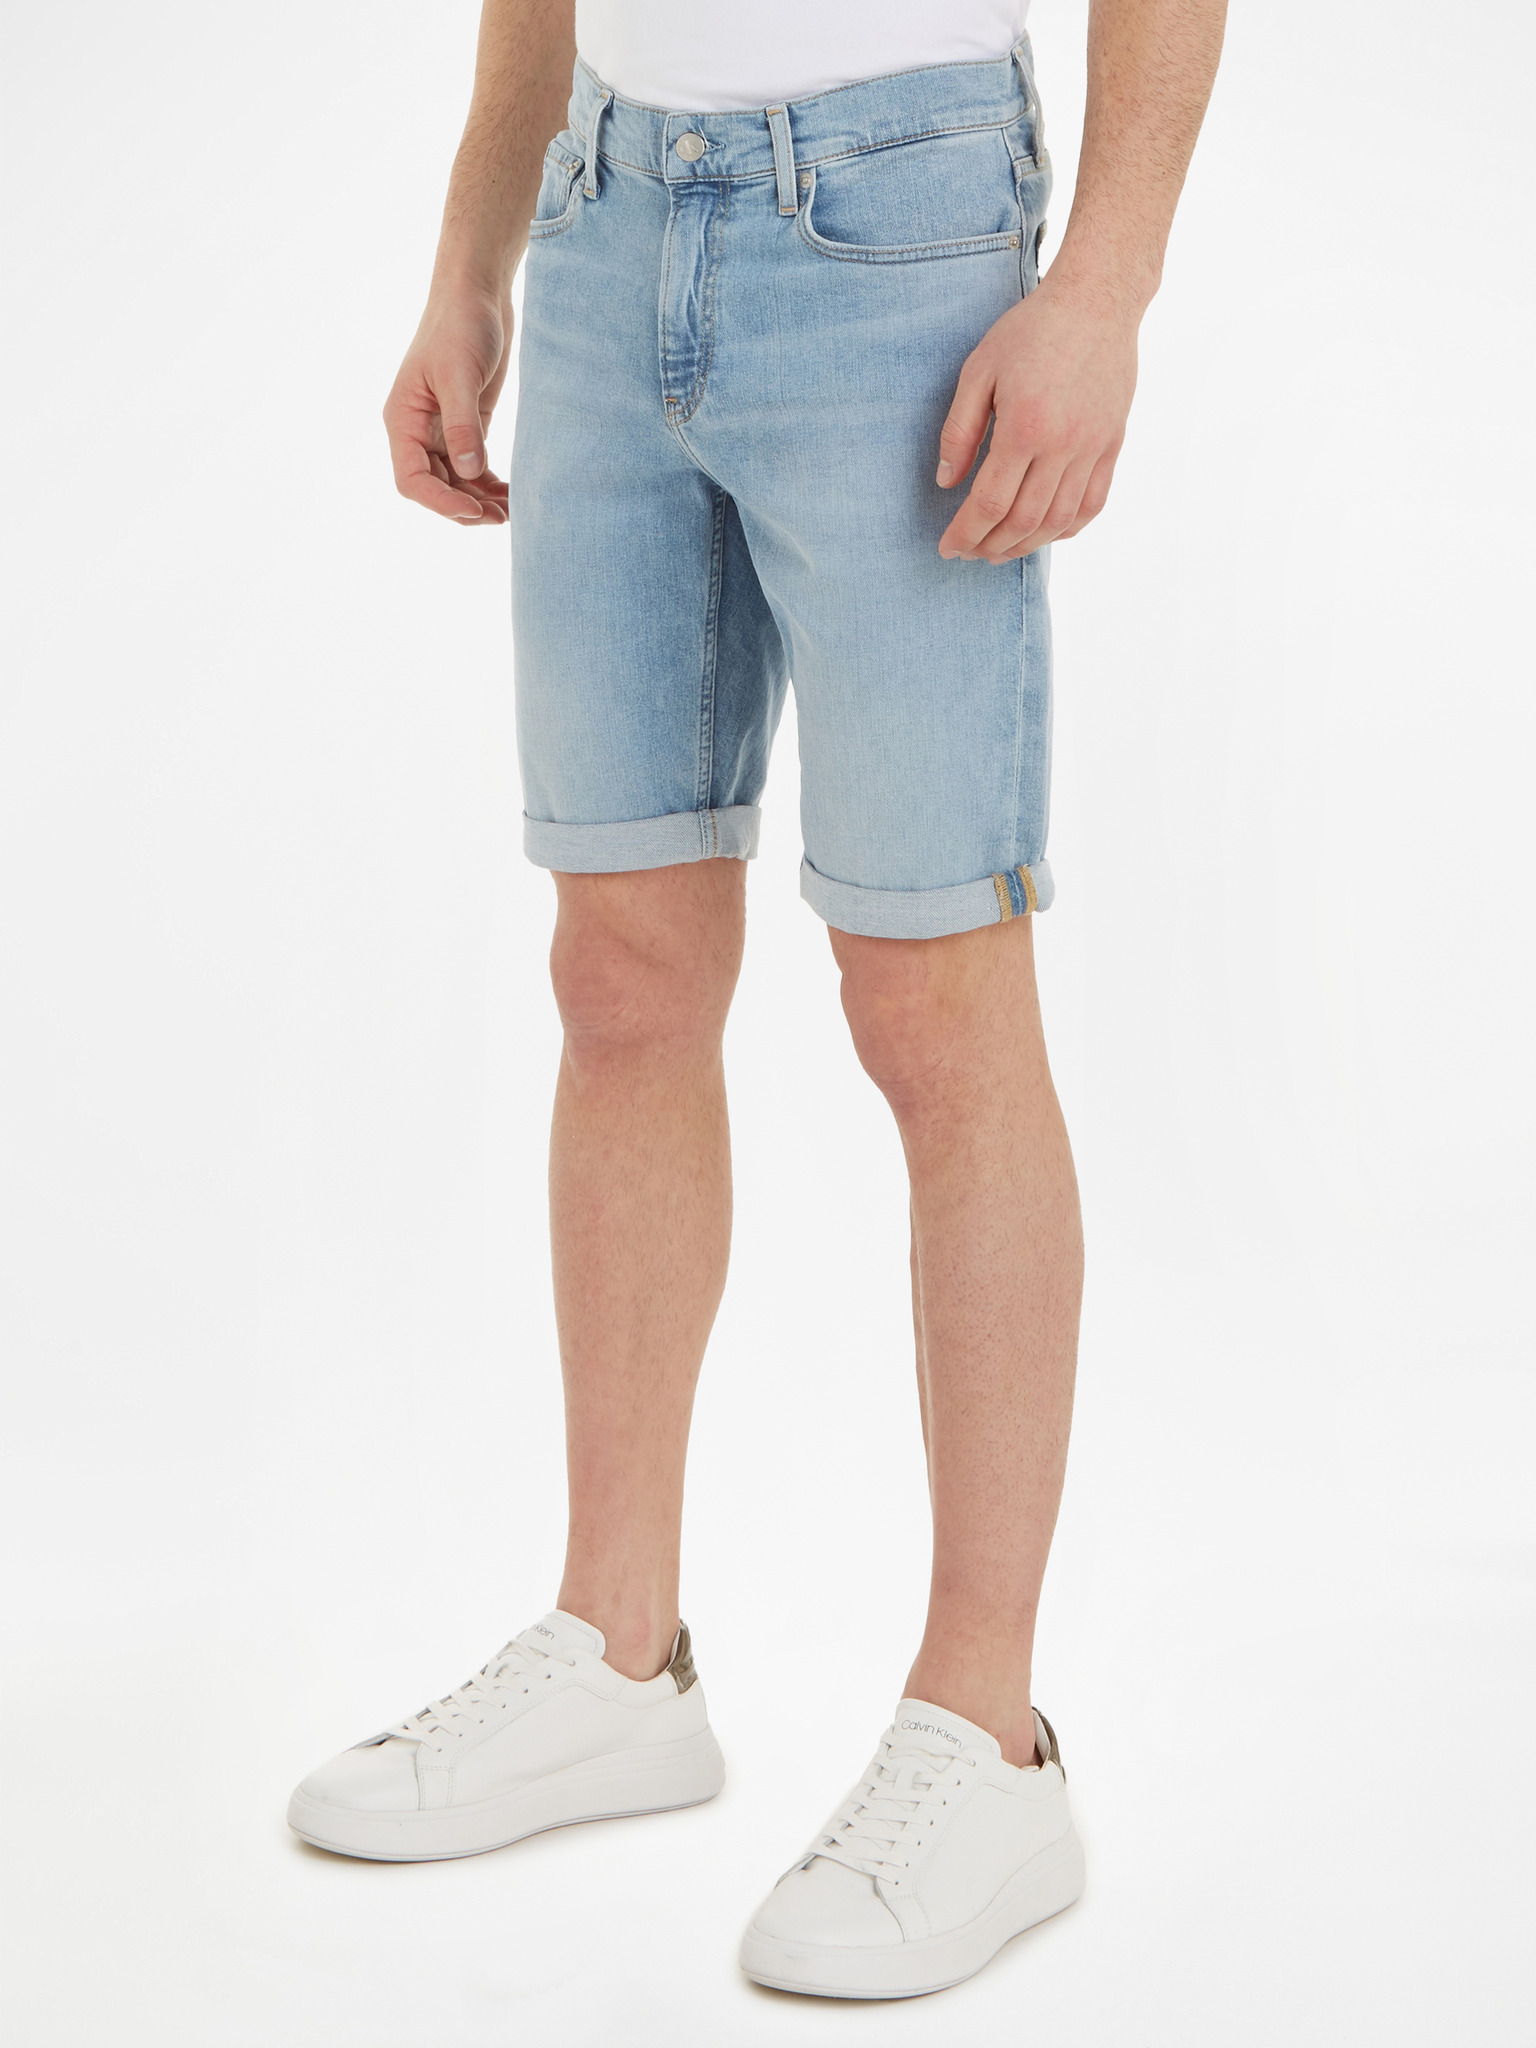 Size M, Sherpa Denim Shorts | Unique jeans, Sherpa denim, Denim shorts